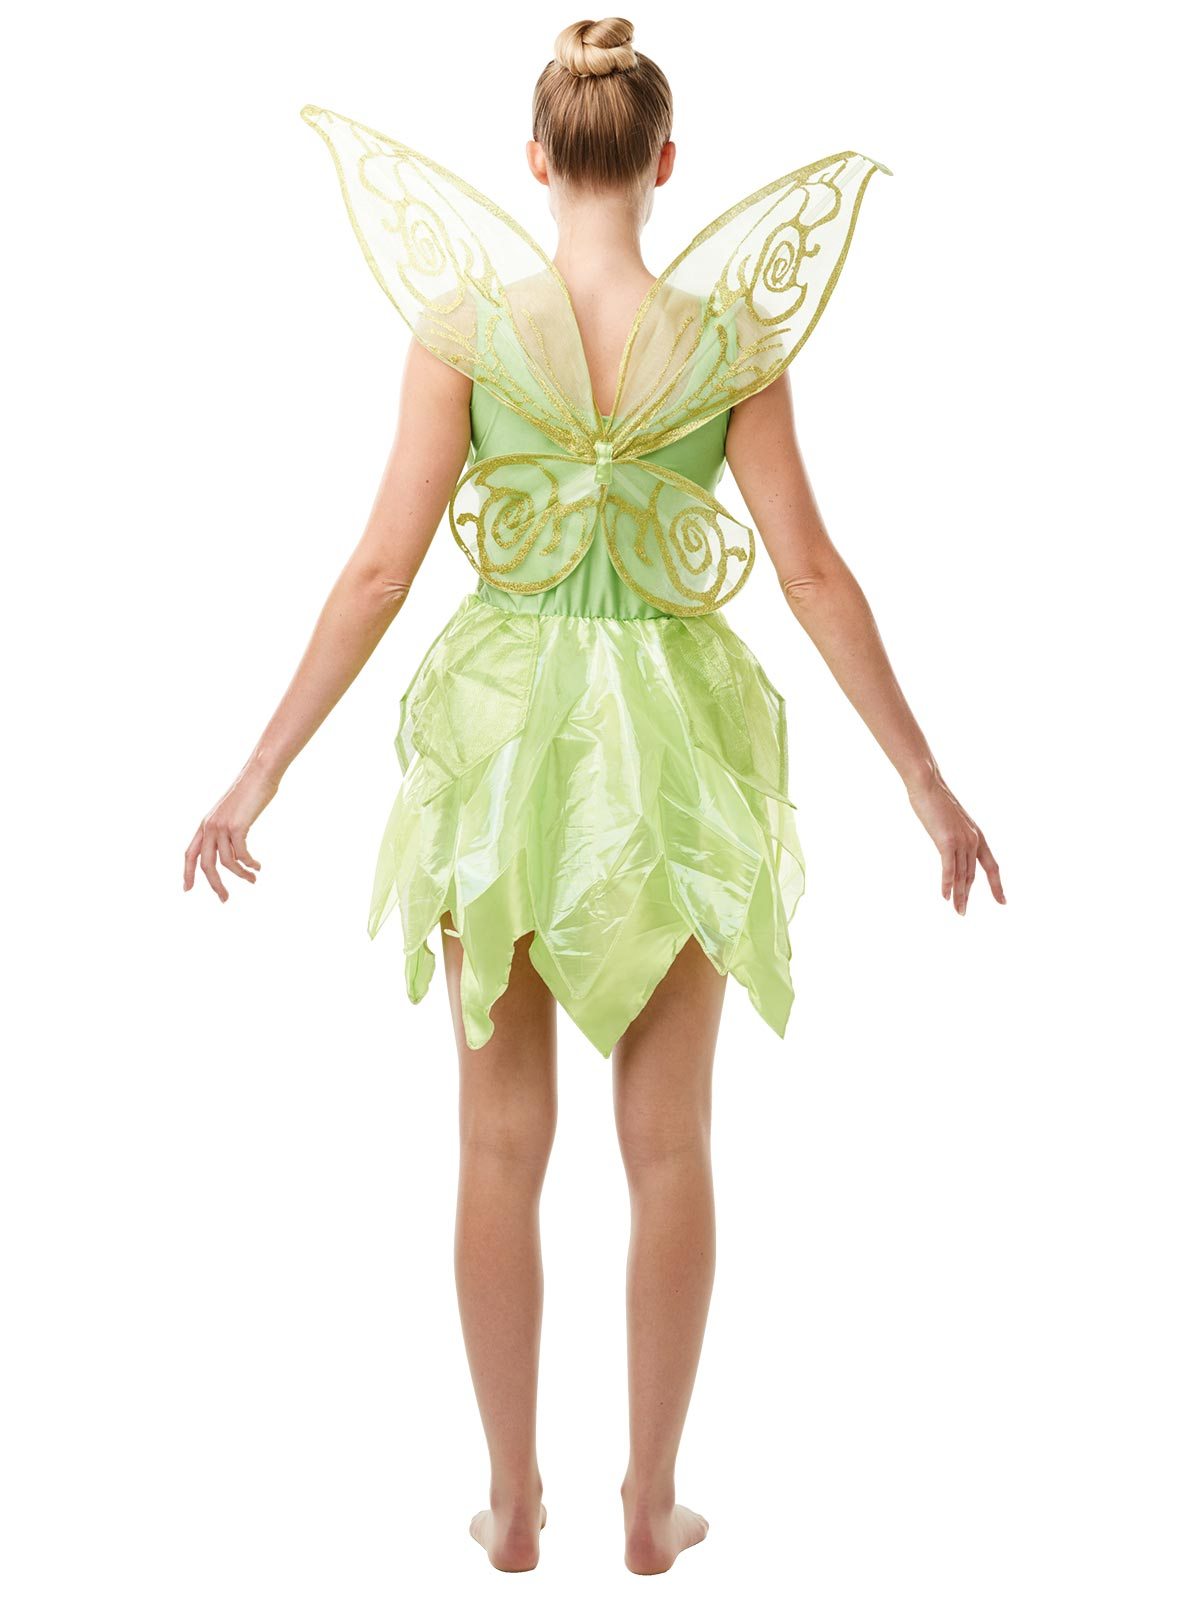 Costume Adult Tinkerbell Fairy Dress & Wings Medium